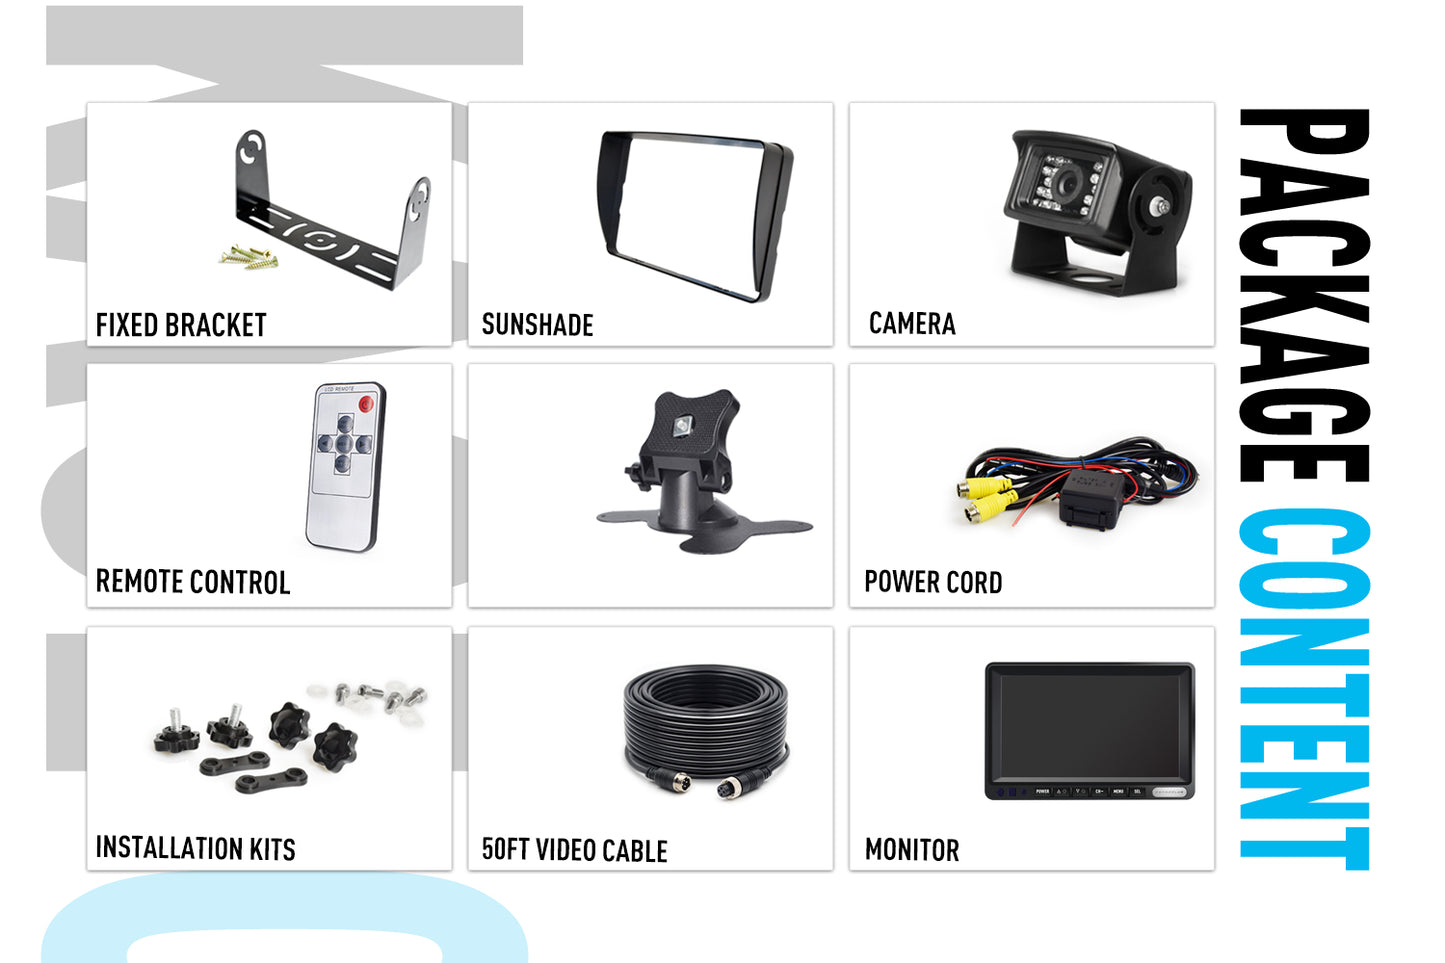 ZEROXCLUB Digital Backup Camera System Kit,Sharp CCD Chip, IP69 Waterproof Rear View Camera, 7’’ LCD Reversing Monitor for Truck/Semi-Trailer/Box Truck/RV (ERY01-Wired)